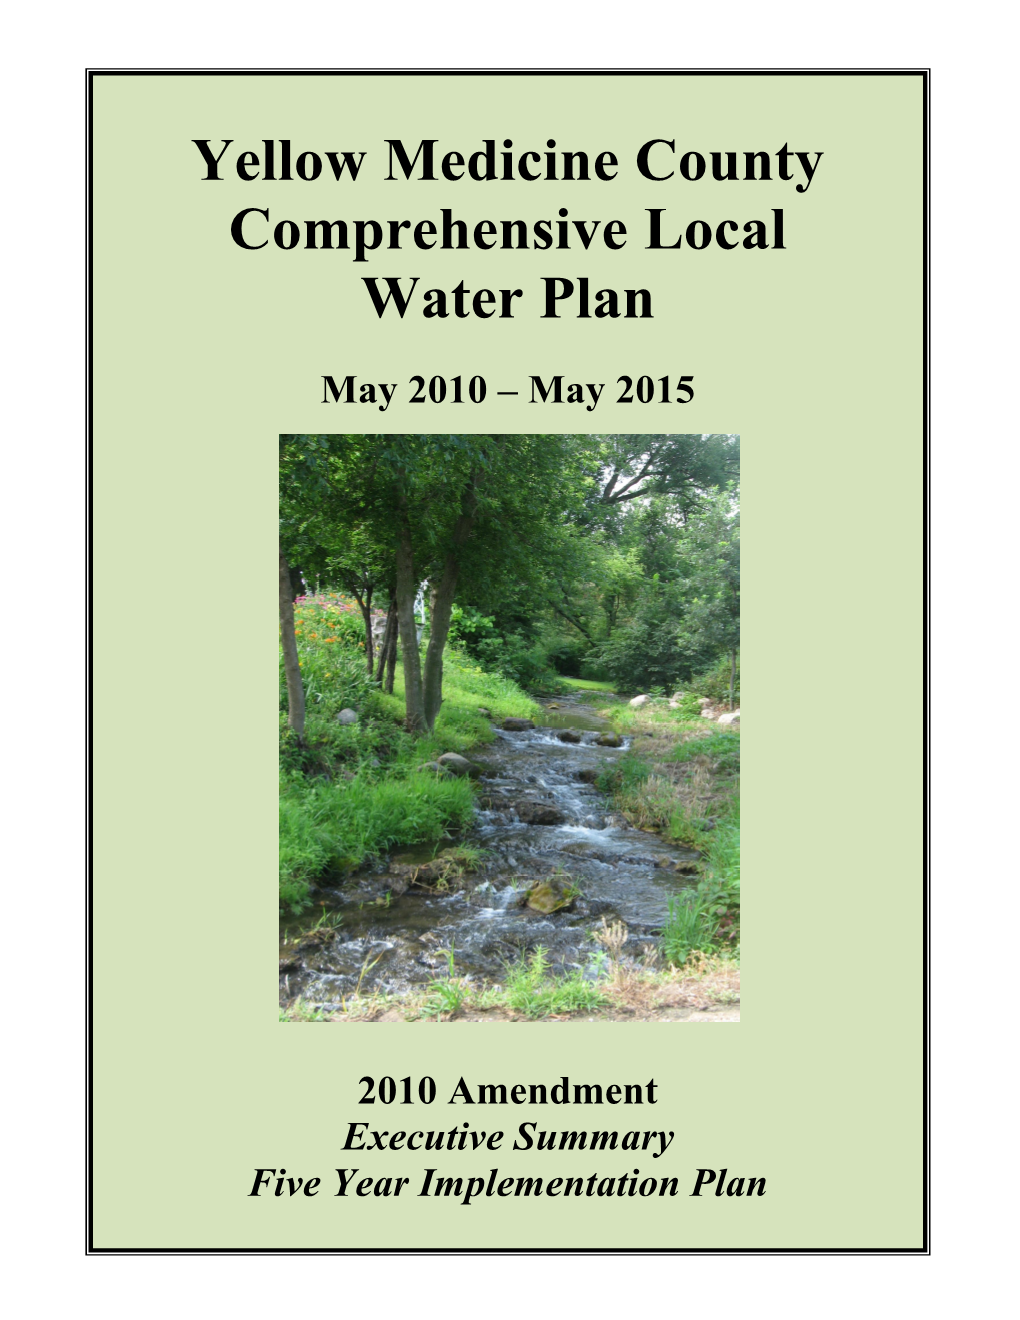 2010 Amendment to Comprehensive Local Water Plan